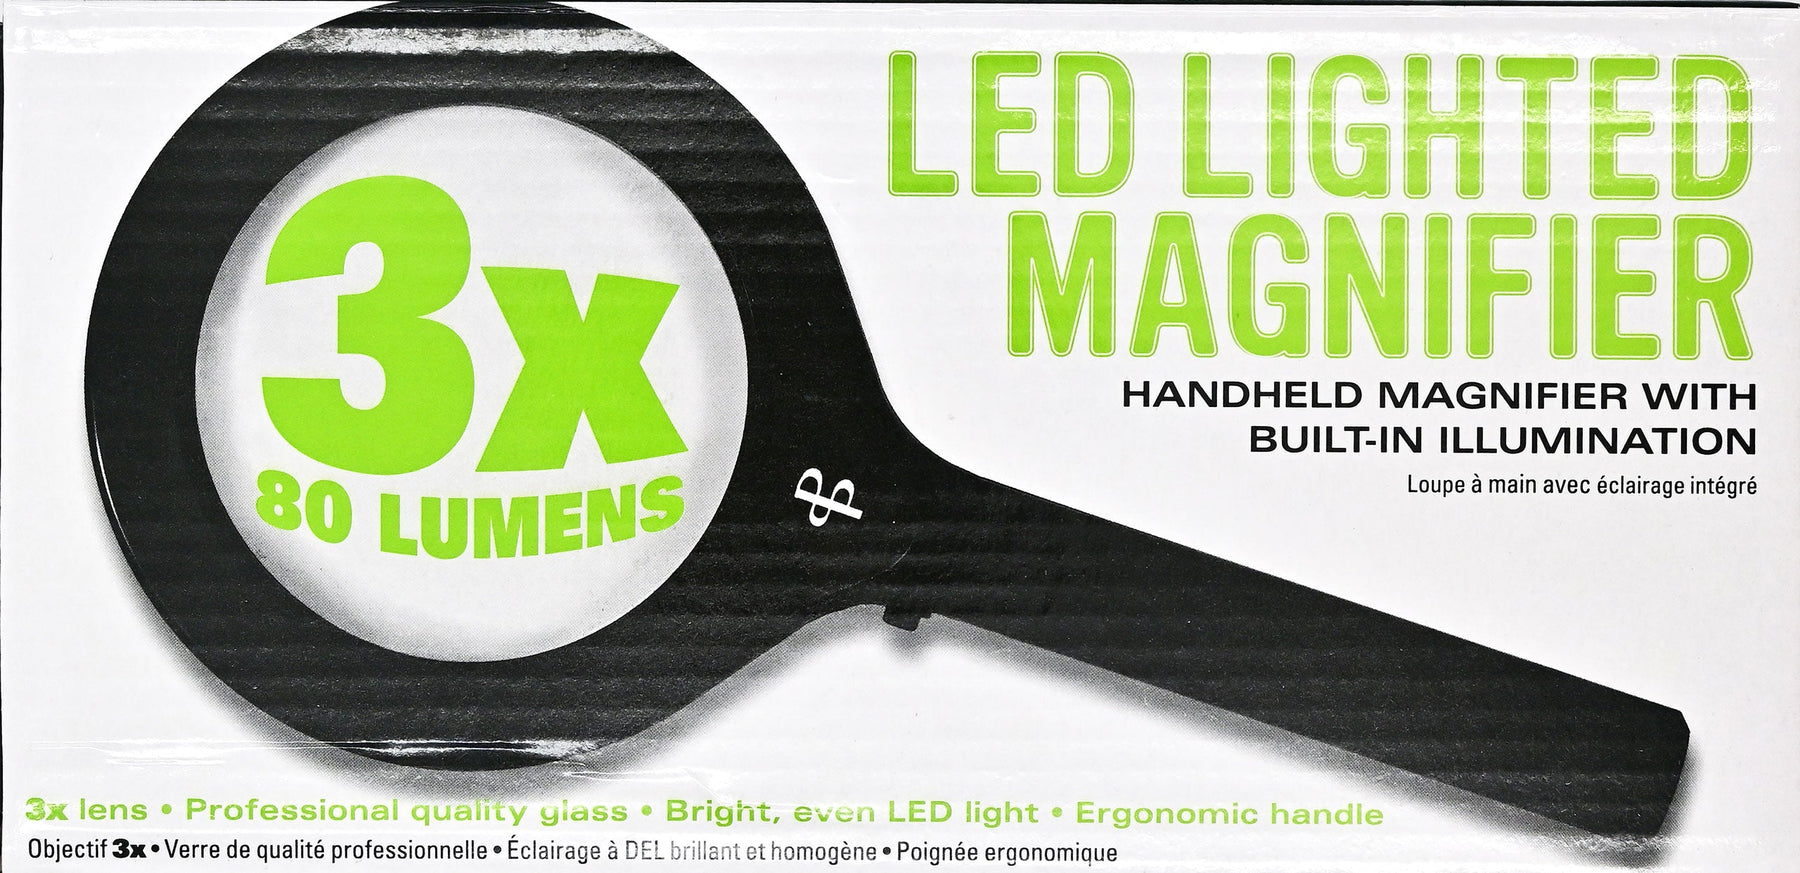 Handheld LED Lighted Magnifier – Peter Pauper Press